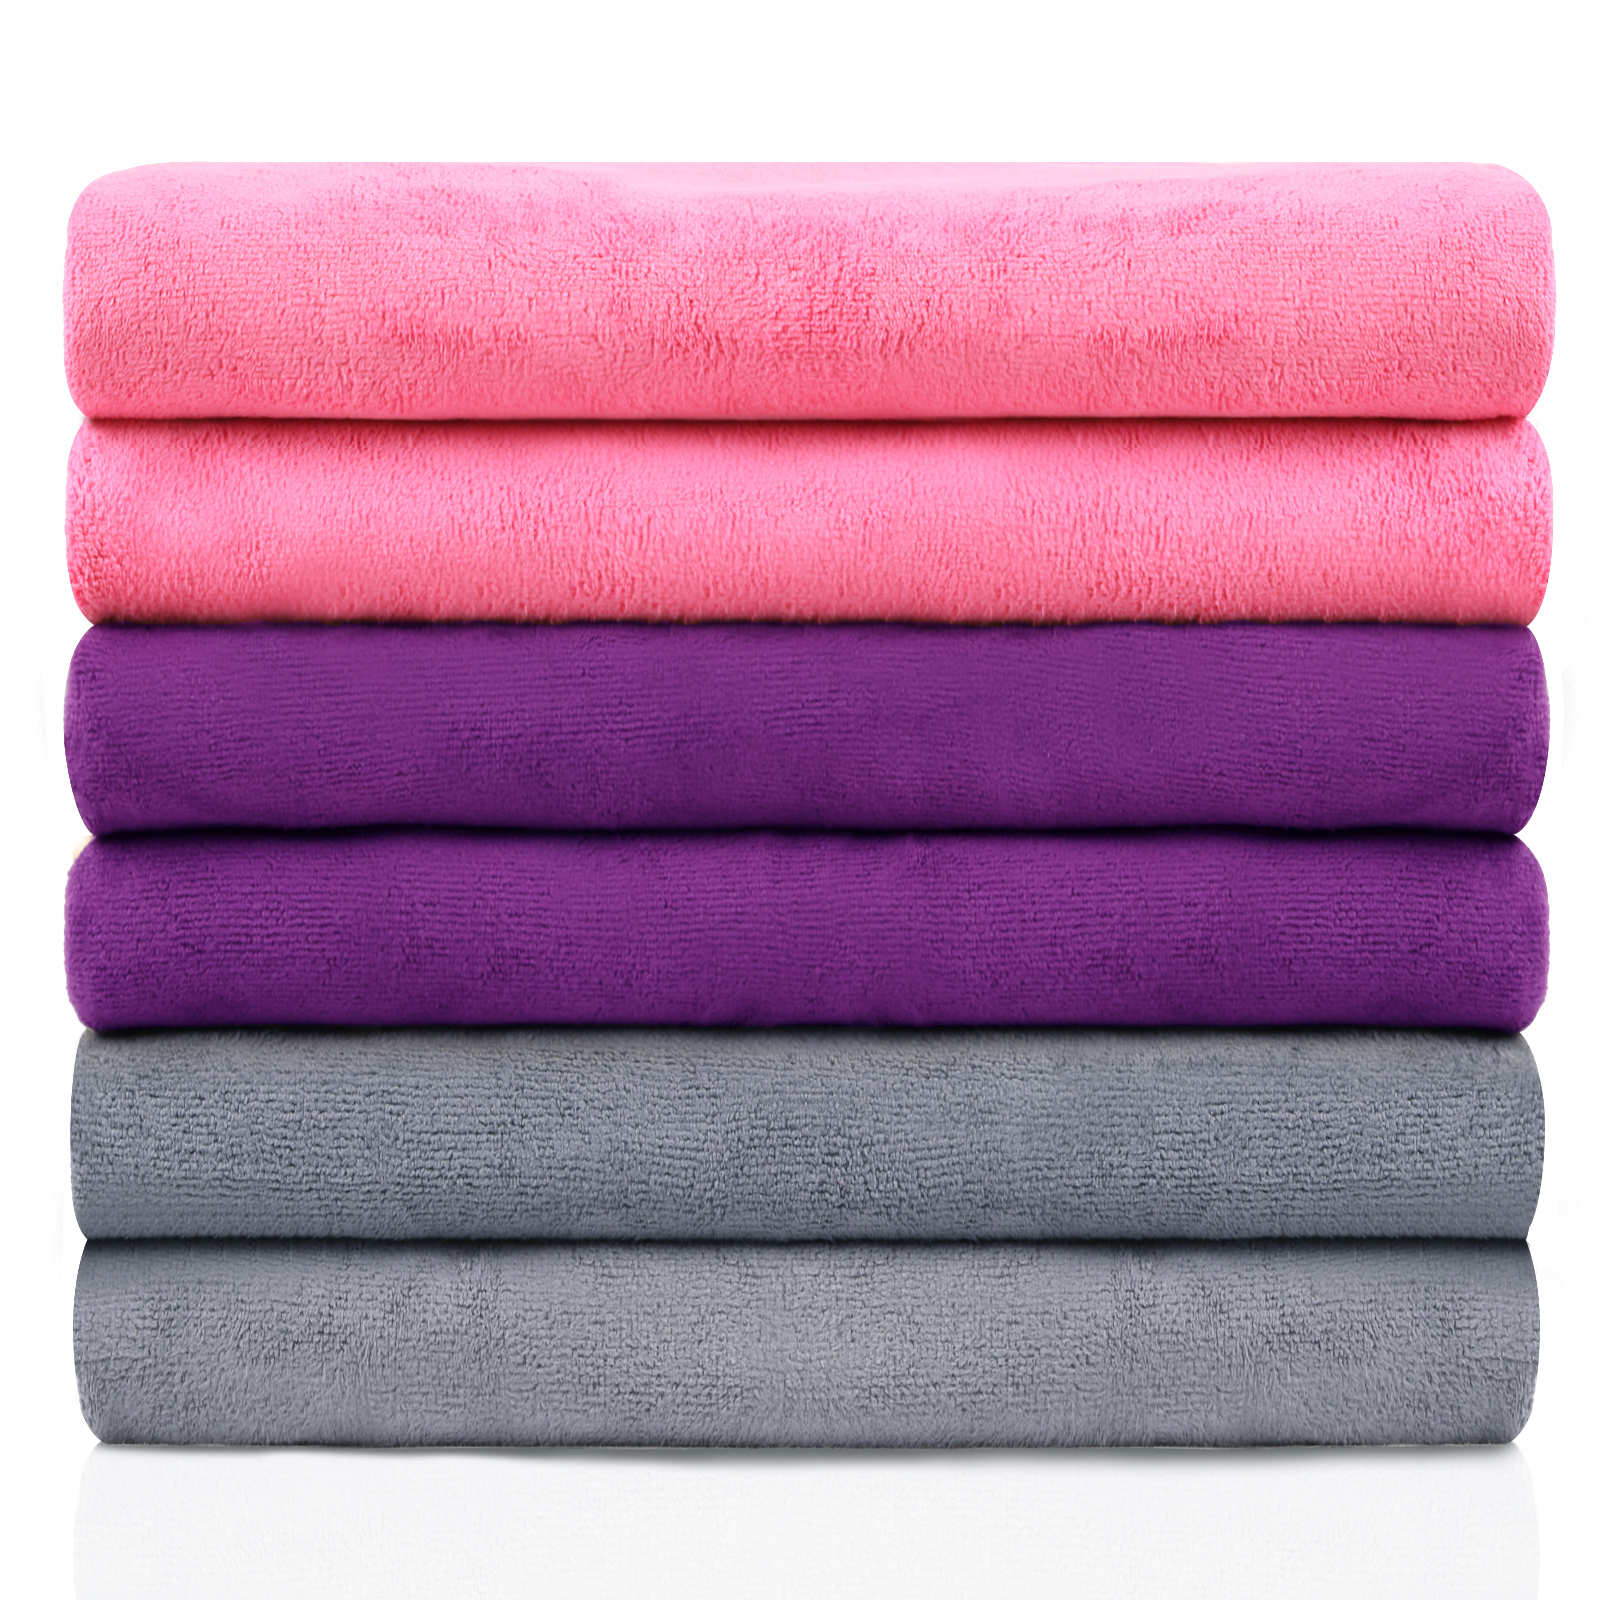 JML Bath Towel, Microfiber 6 Pack Towel Sets (27 x 55") - Extra Absorbent, Fast Drying Multipurpose Use as Bath Fitness Towel, Sports Towels, Yoga Towel, Pink，Purple，Grey - image 1 of 5